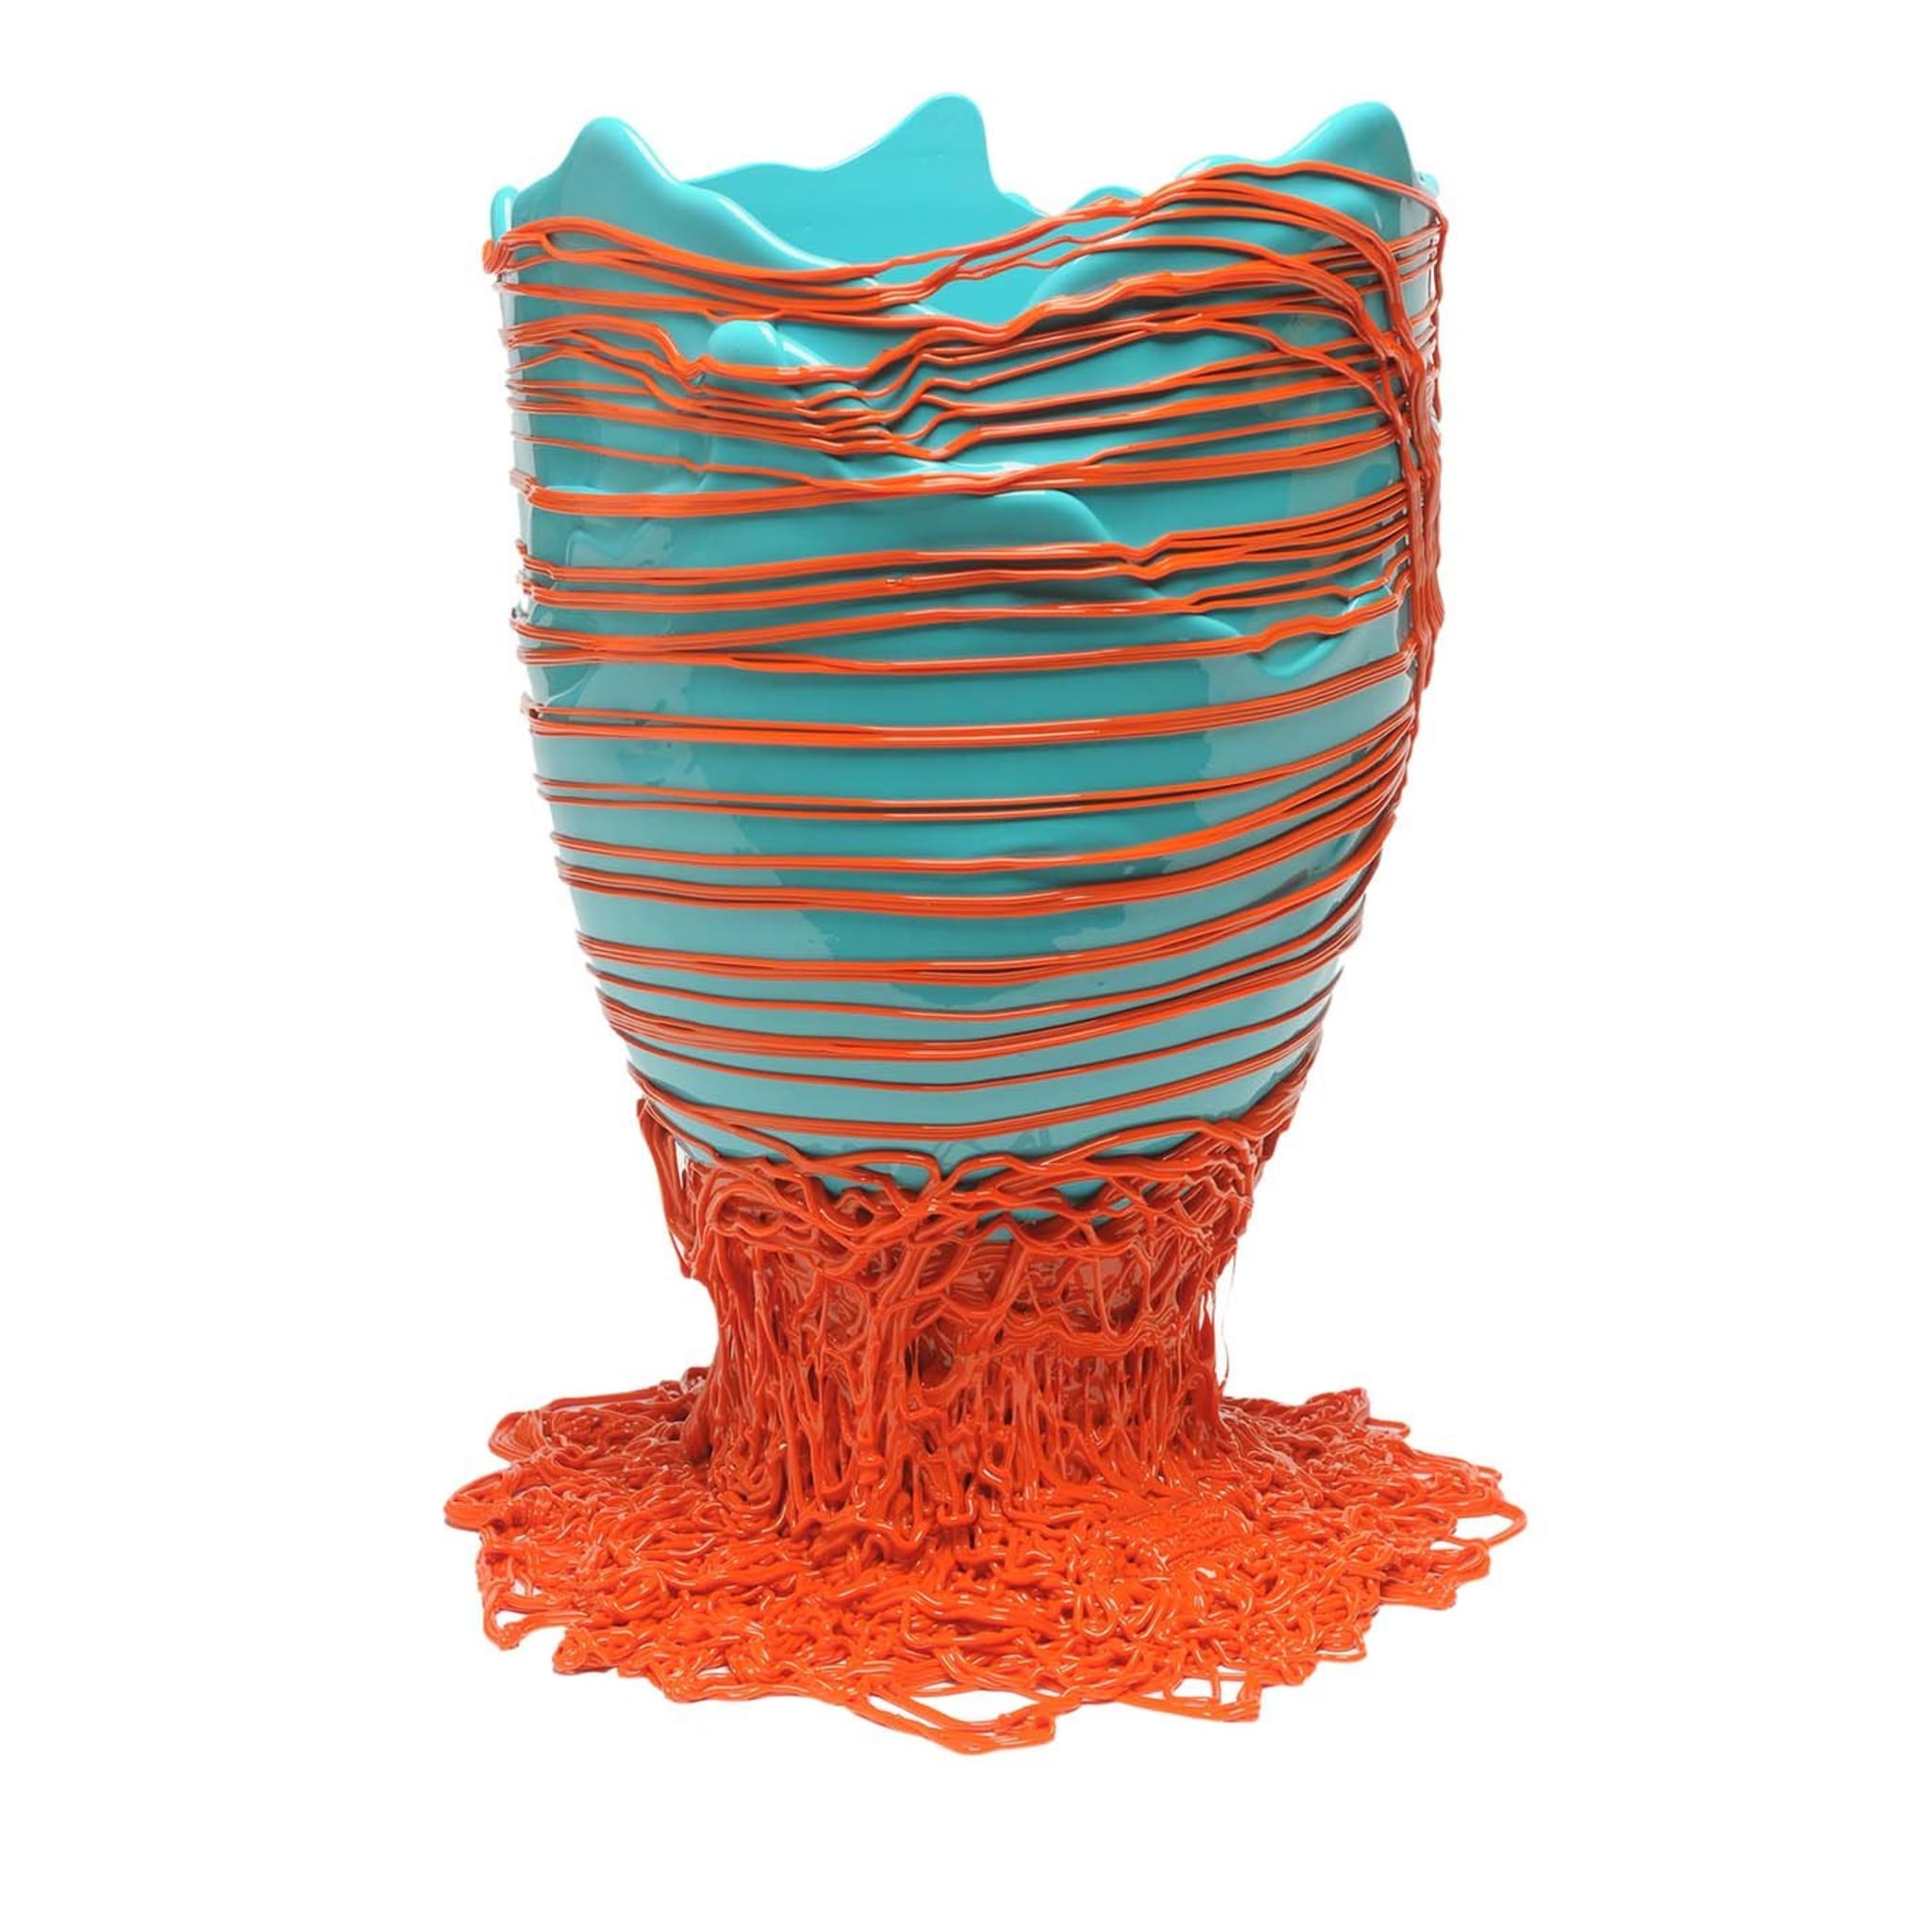 Grand vase Spaghetti orange et bleu clair de Gaetano Pesce - Vue principale